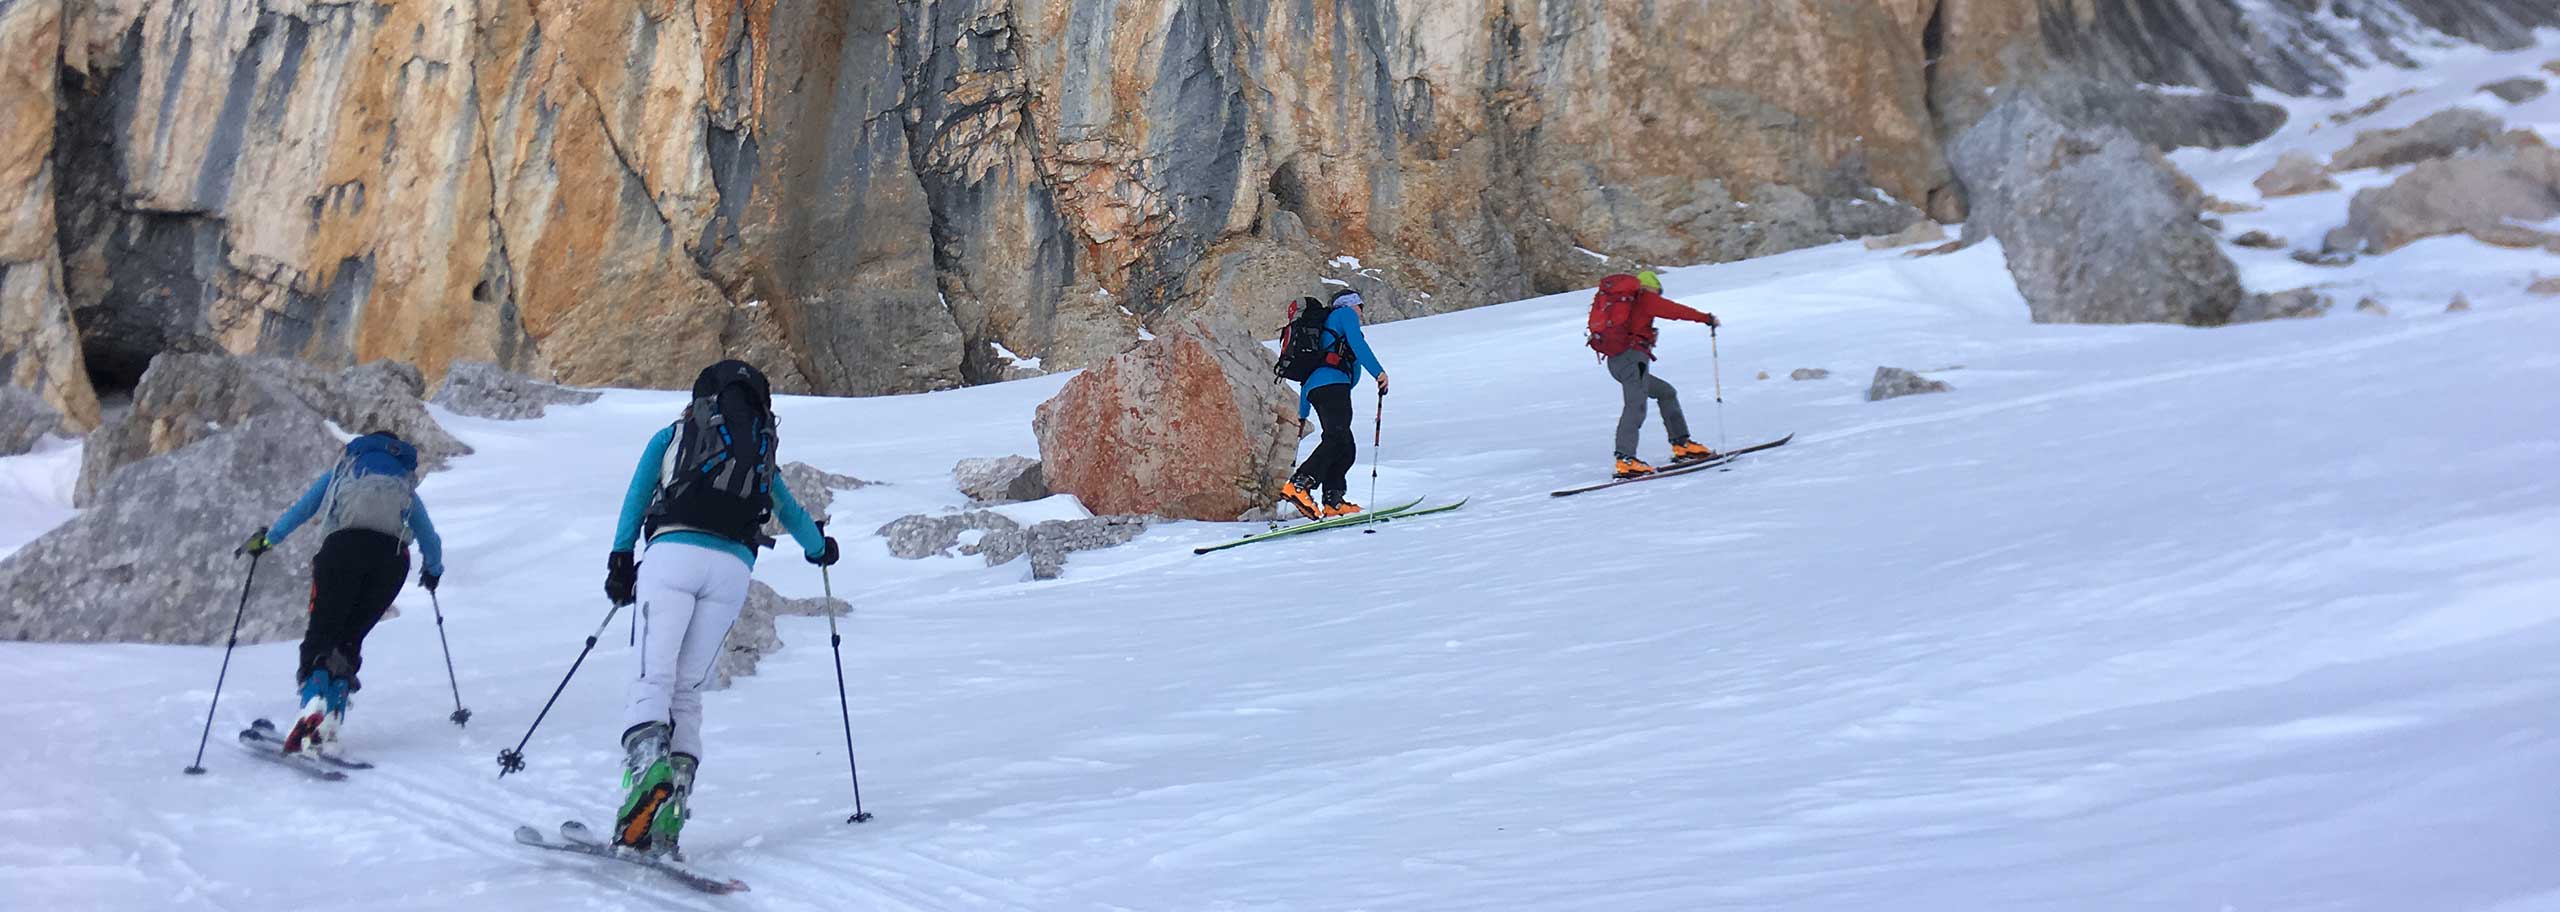 Ski Mountaineering with a Mountain Guide in San Martino di Castrozza